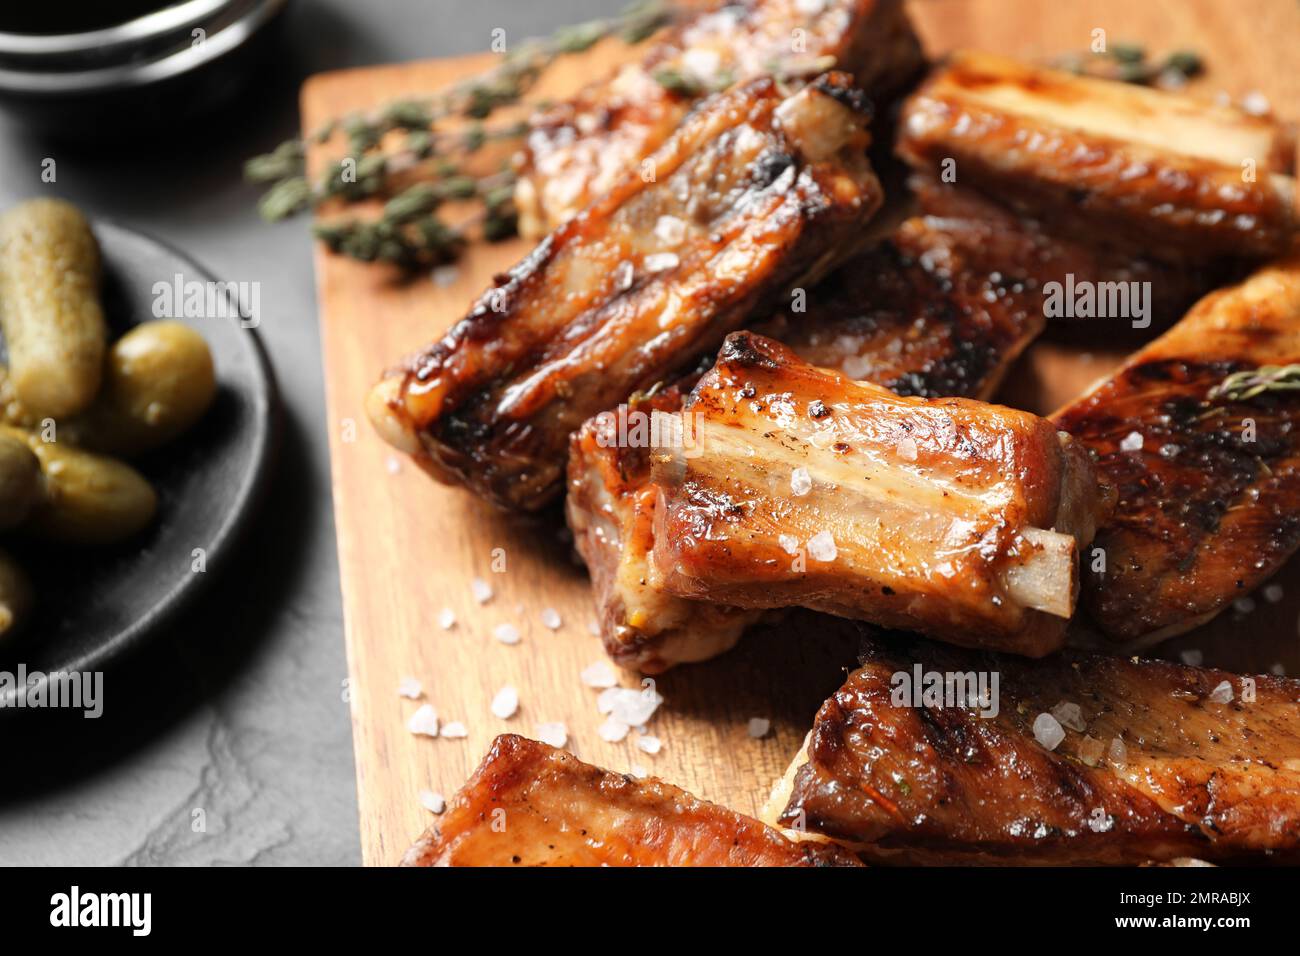 https://c8.alamy.com/comp/2MRABJX/delicious-grilled-ribs-served-on-table-closeup-2MRABJX.jpg